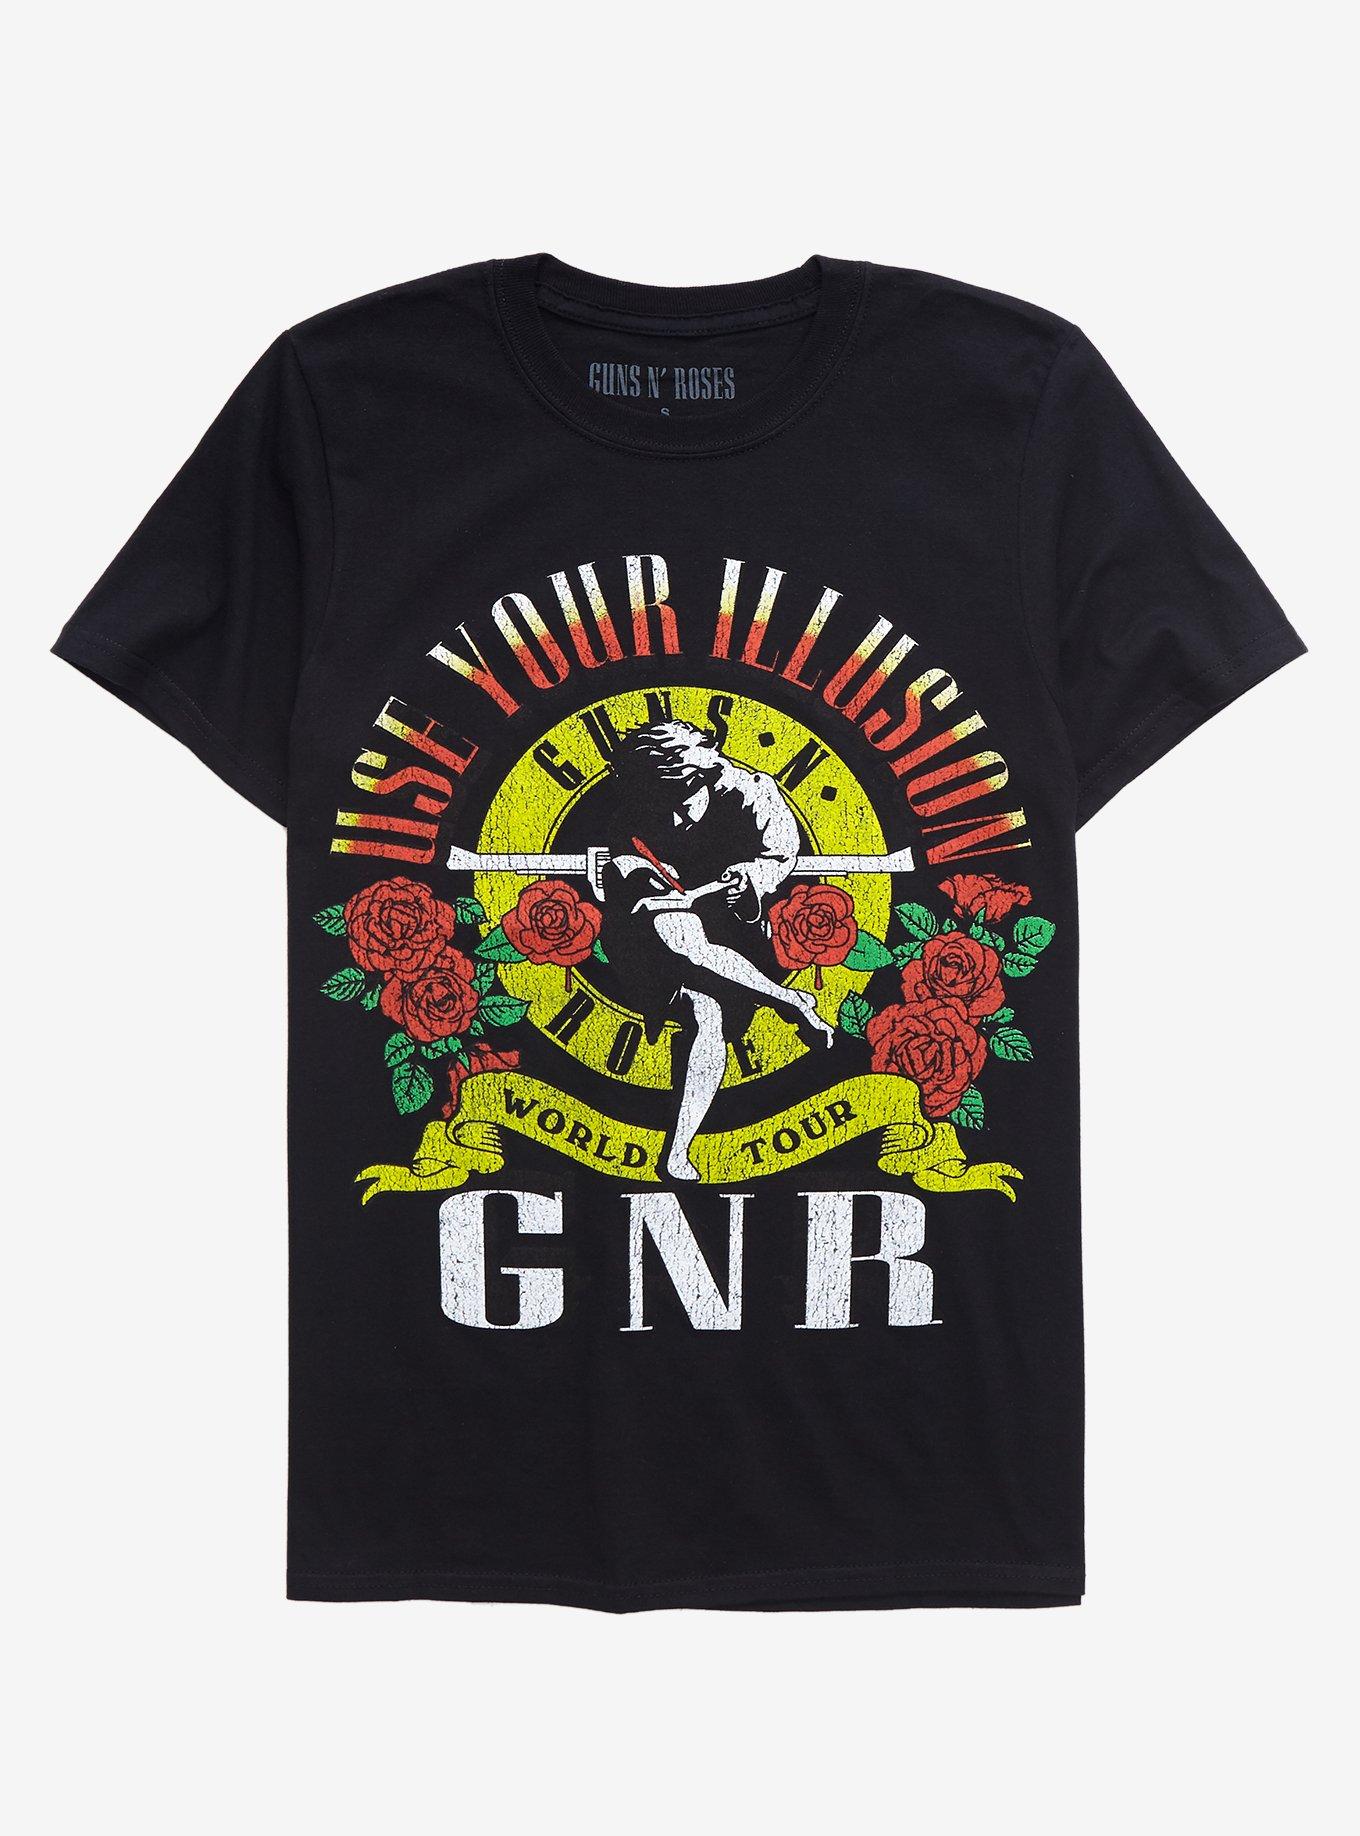 Guns N' Roses Illusion World Tour T-Shirt, BLACK, hi-res